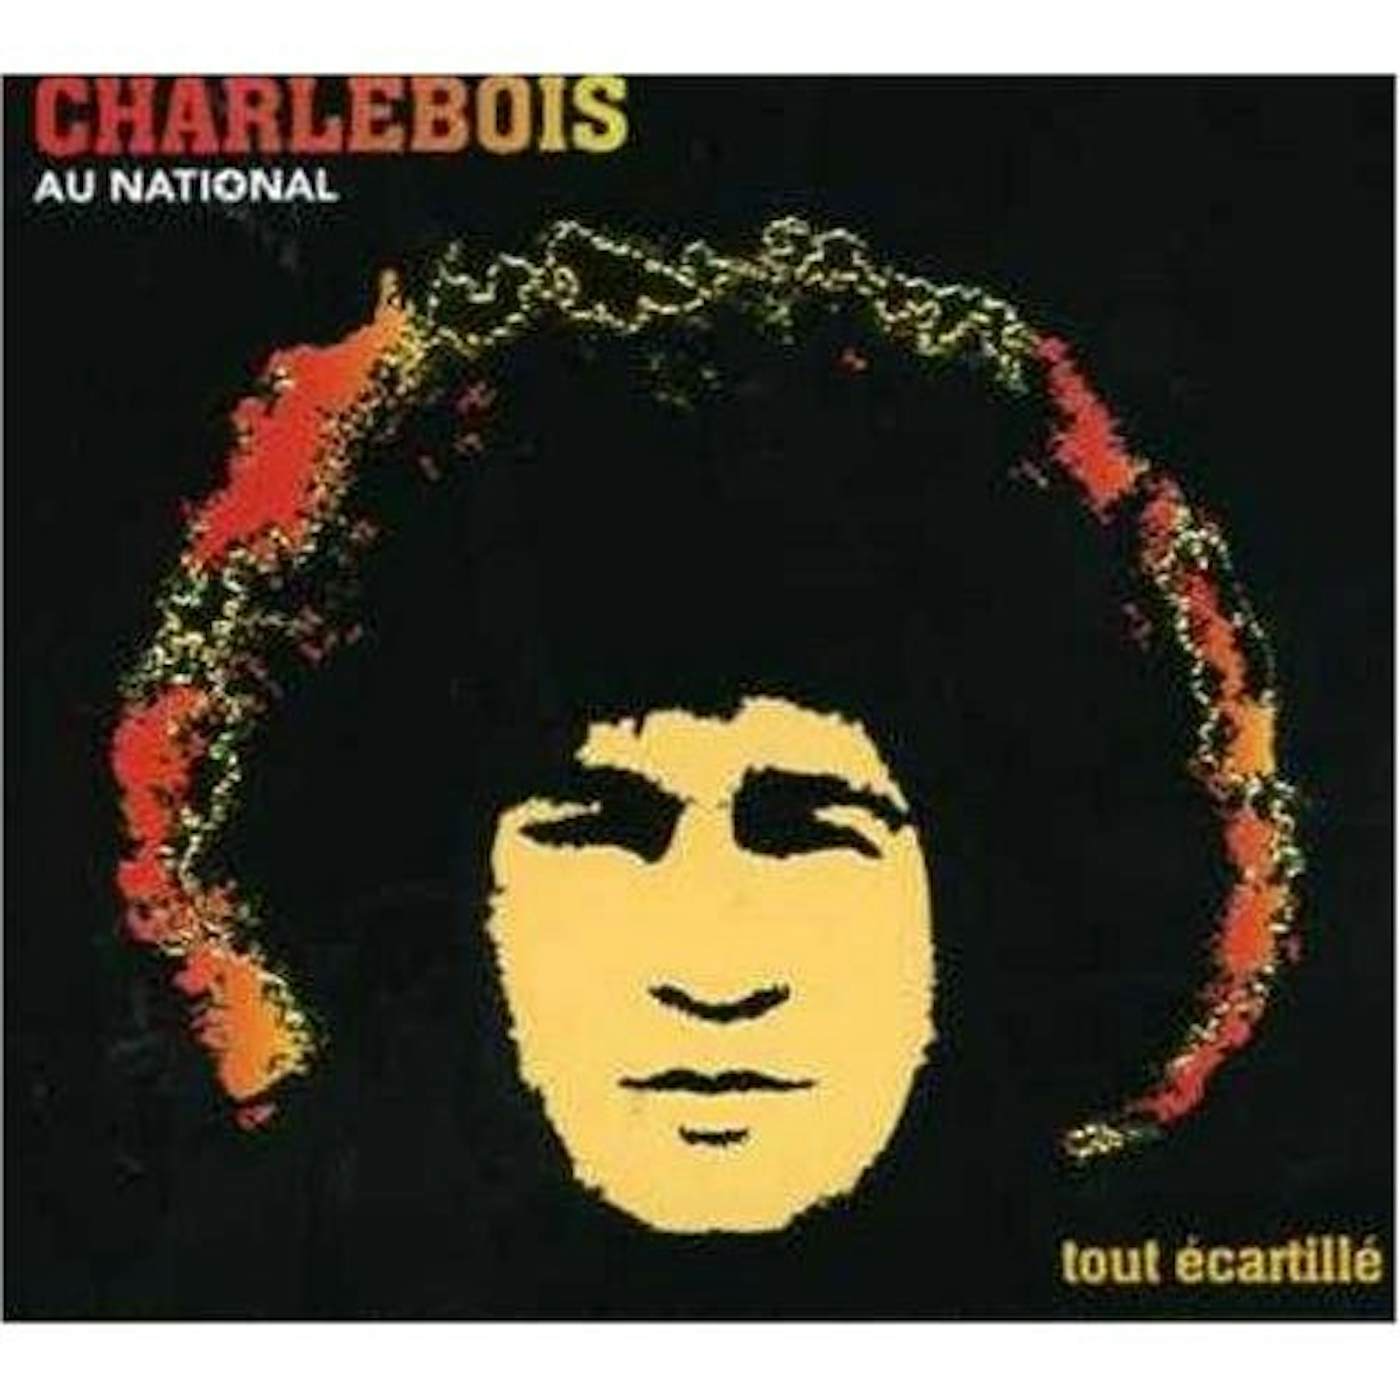 Robert Charlebois TOUT ECARTILLE-EN CONCERT AU NATION CD